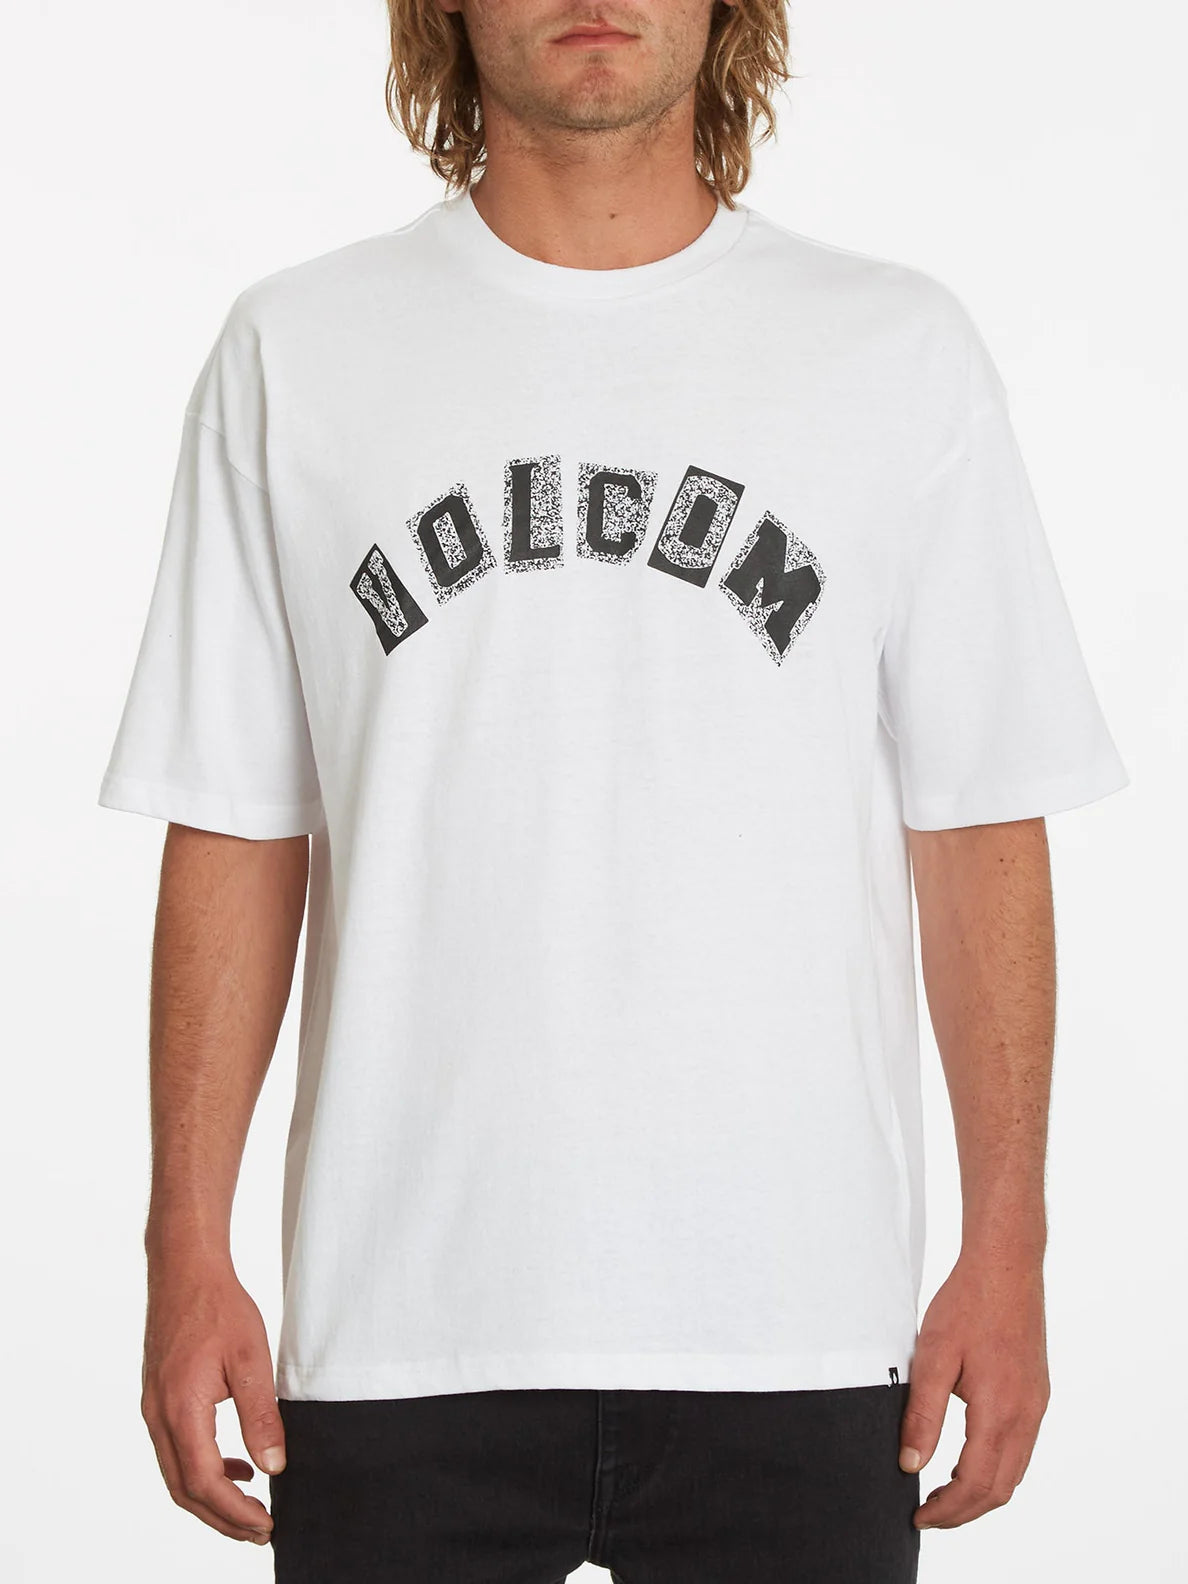 Volcom Hallo Schule weißes T-Shirt | Meistverkaufte Produkte | Neue Produkte | Neueste Produkte | surfdevils.com